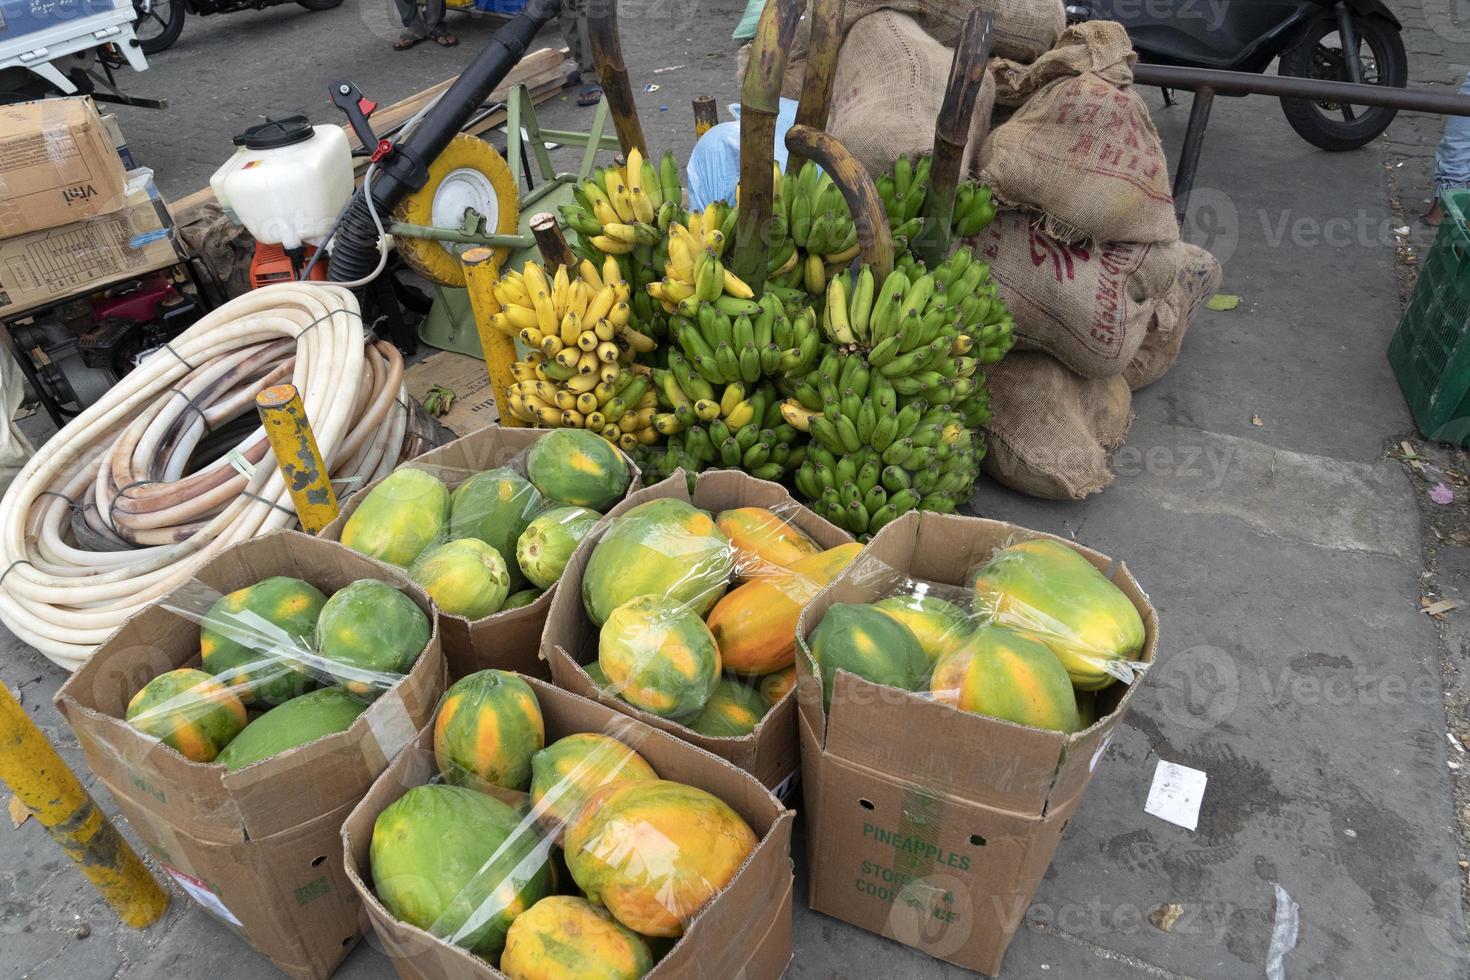 maschio Maldive frutta e verdure mercato foto